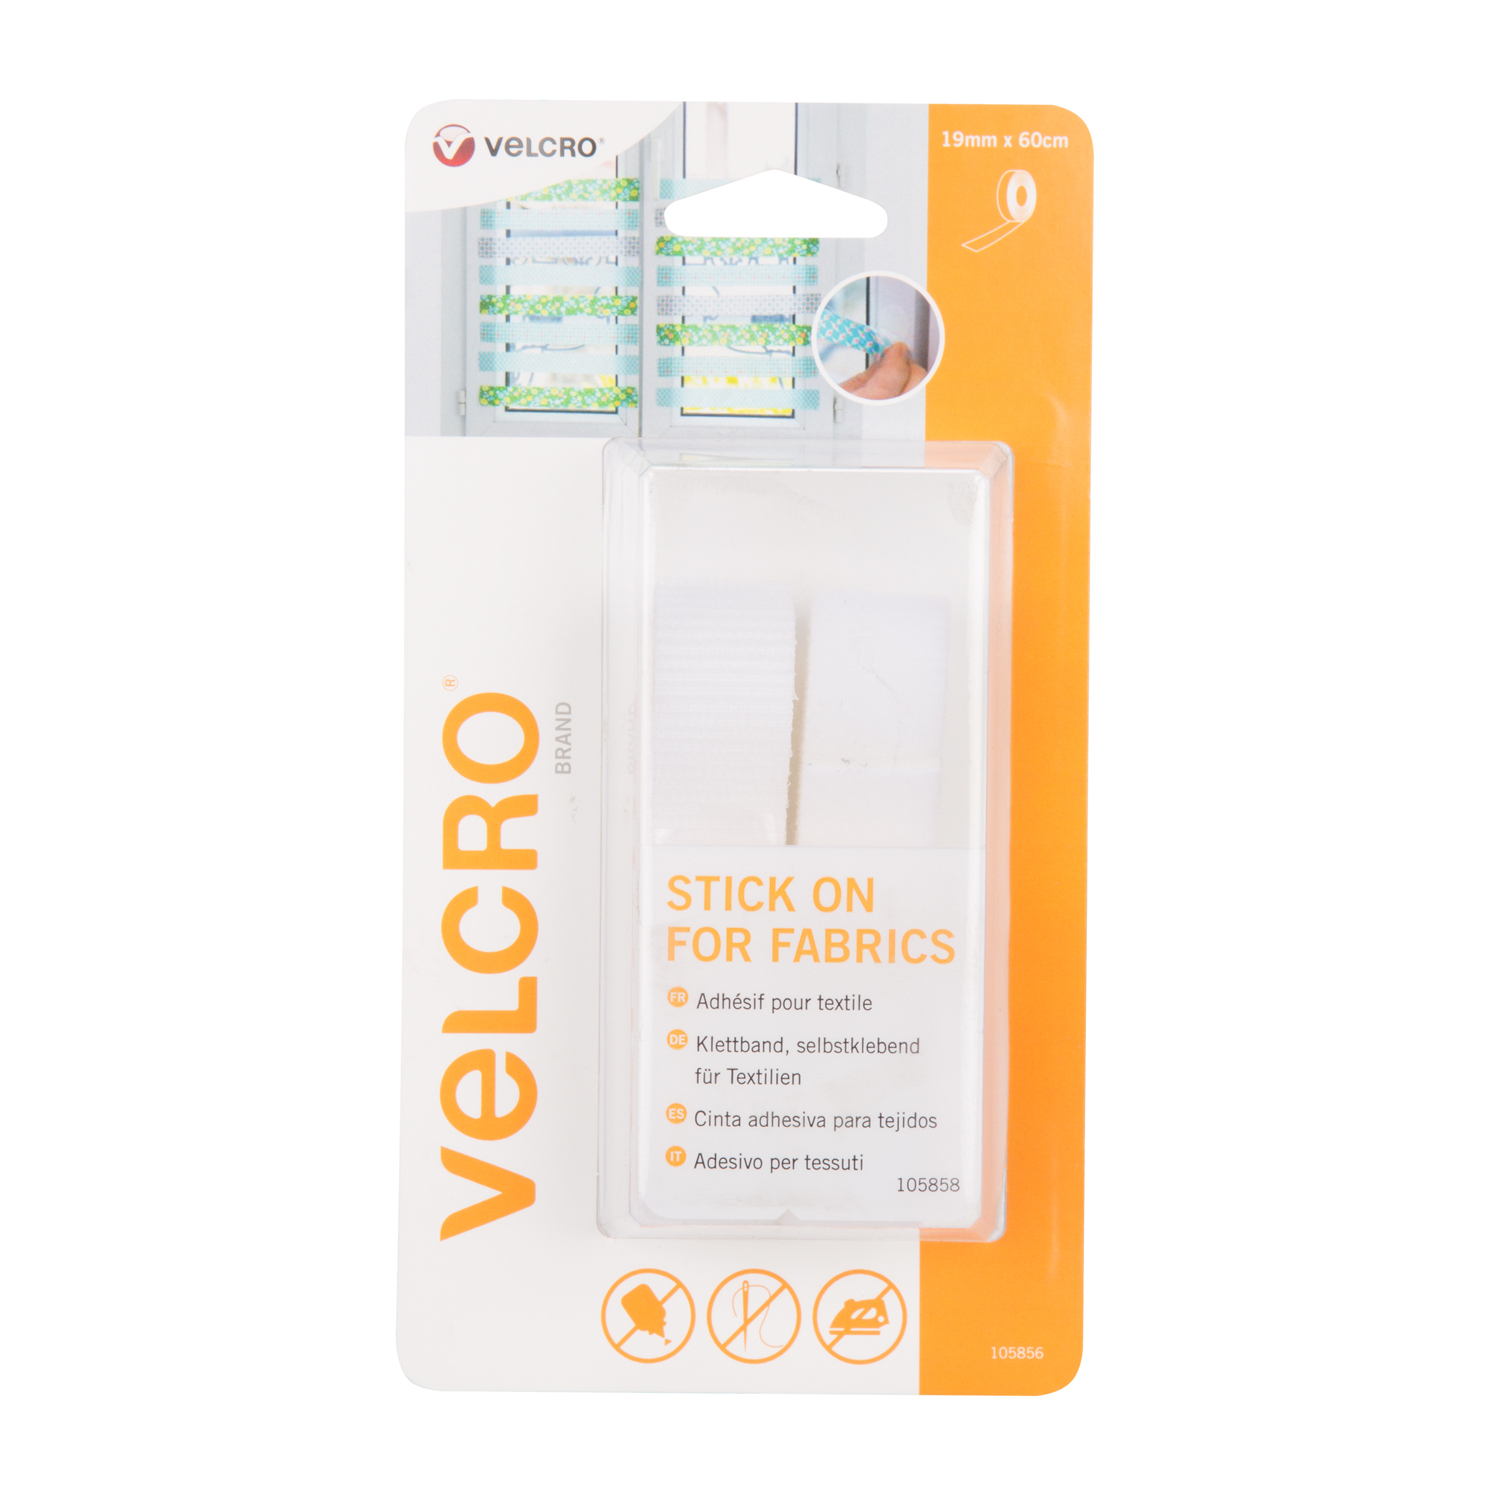 VELCRO Brand Stick On For Fabrics Tape - White Image